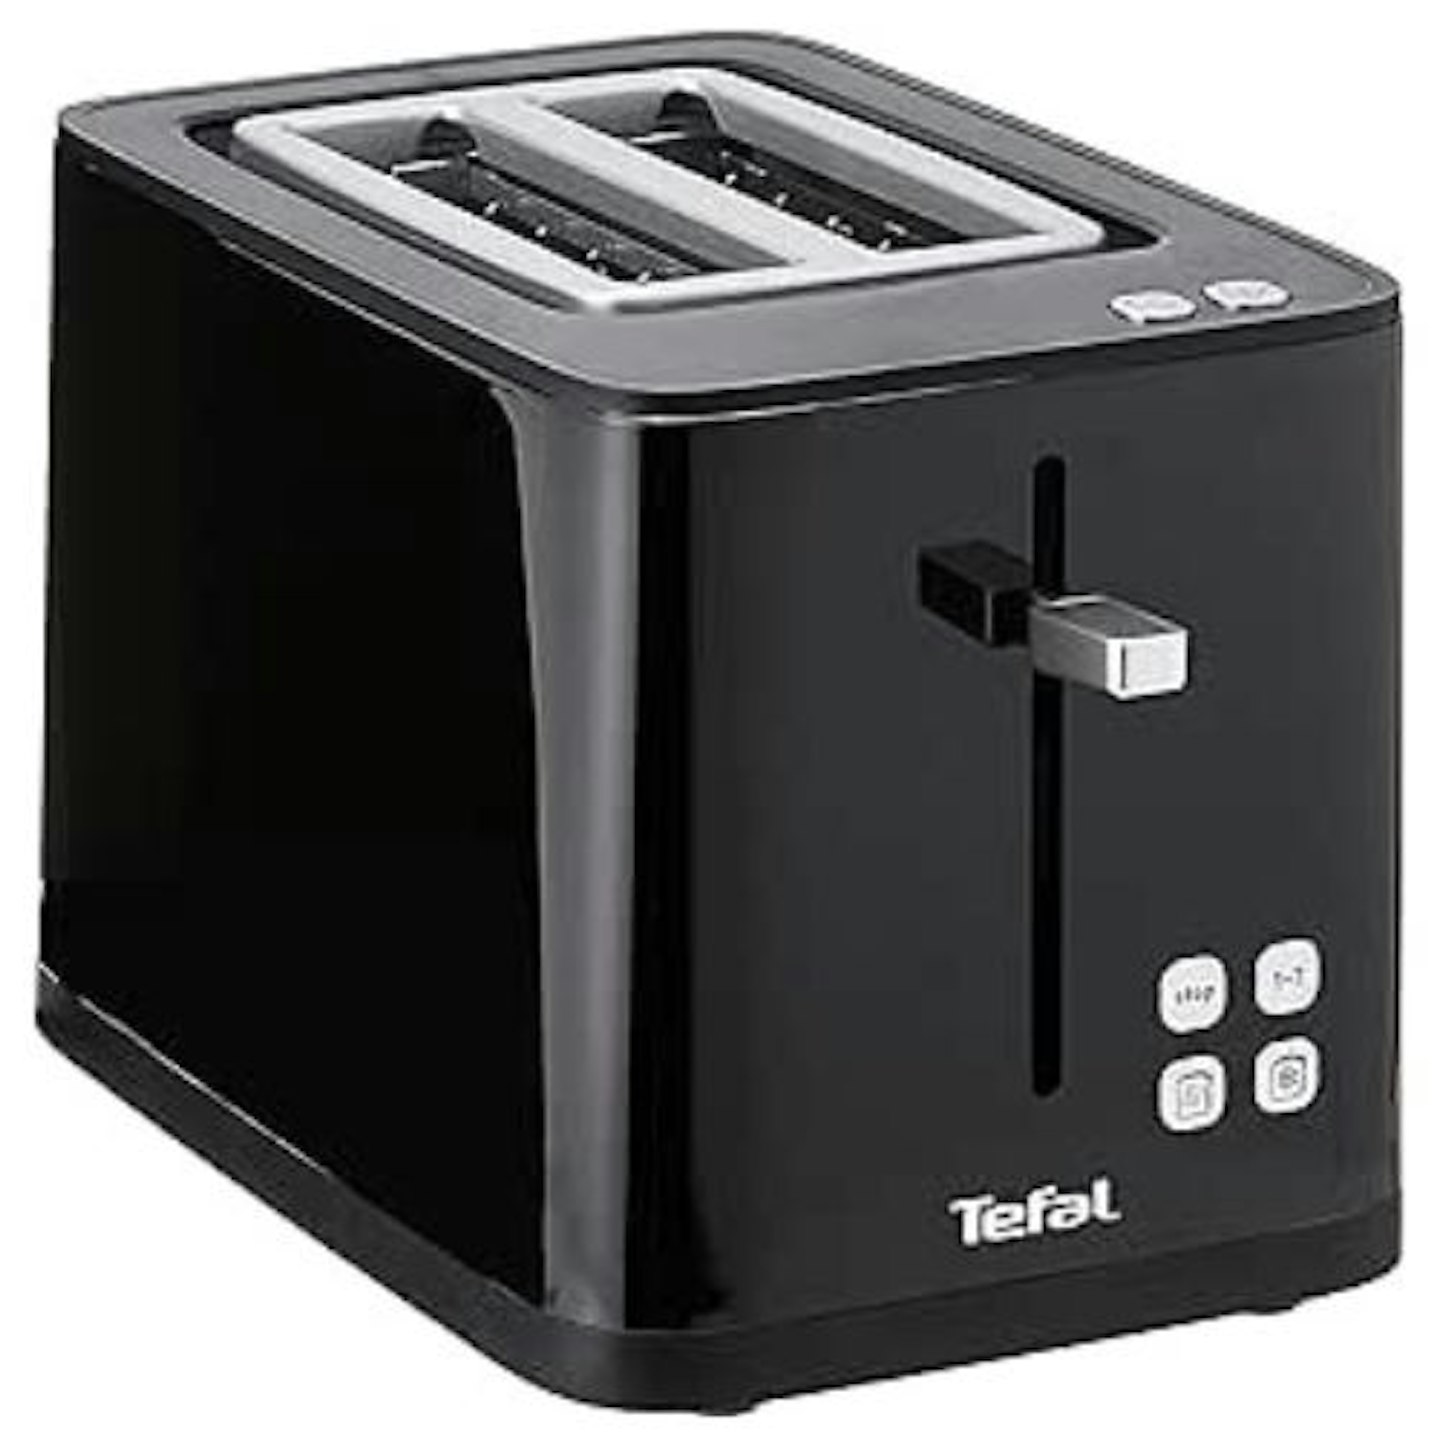 Tefal Smart 'N' Light 2 Slice Digital Toaster